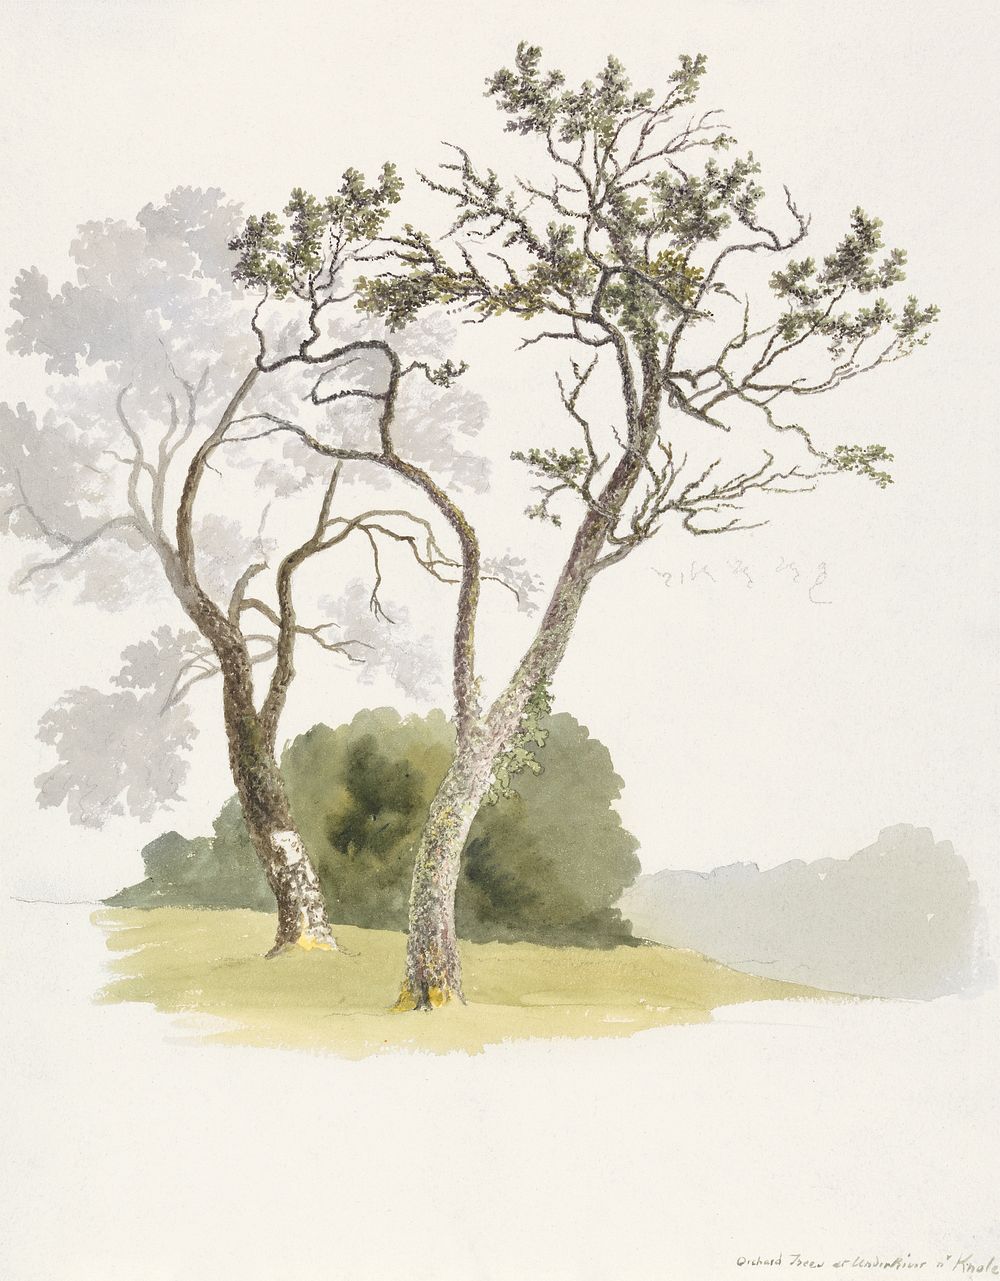 Orchard Trees at Under River near Knole (1826), vintage nature illustration by Robert Hills. Original public domain image…